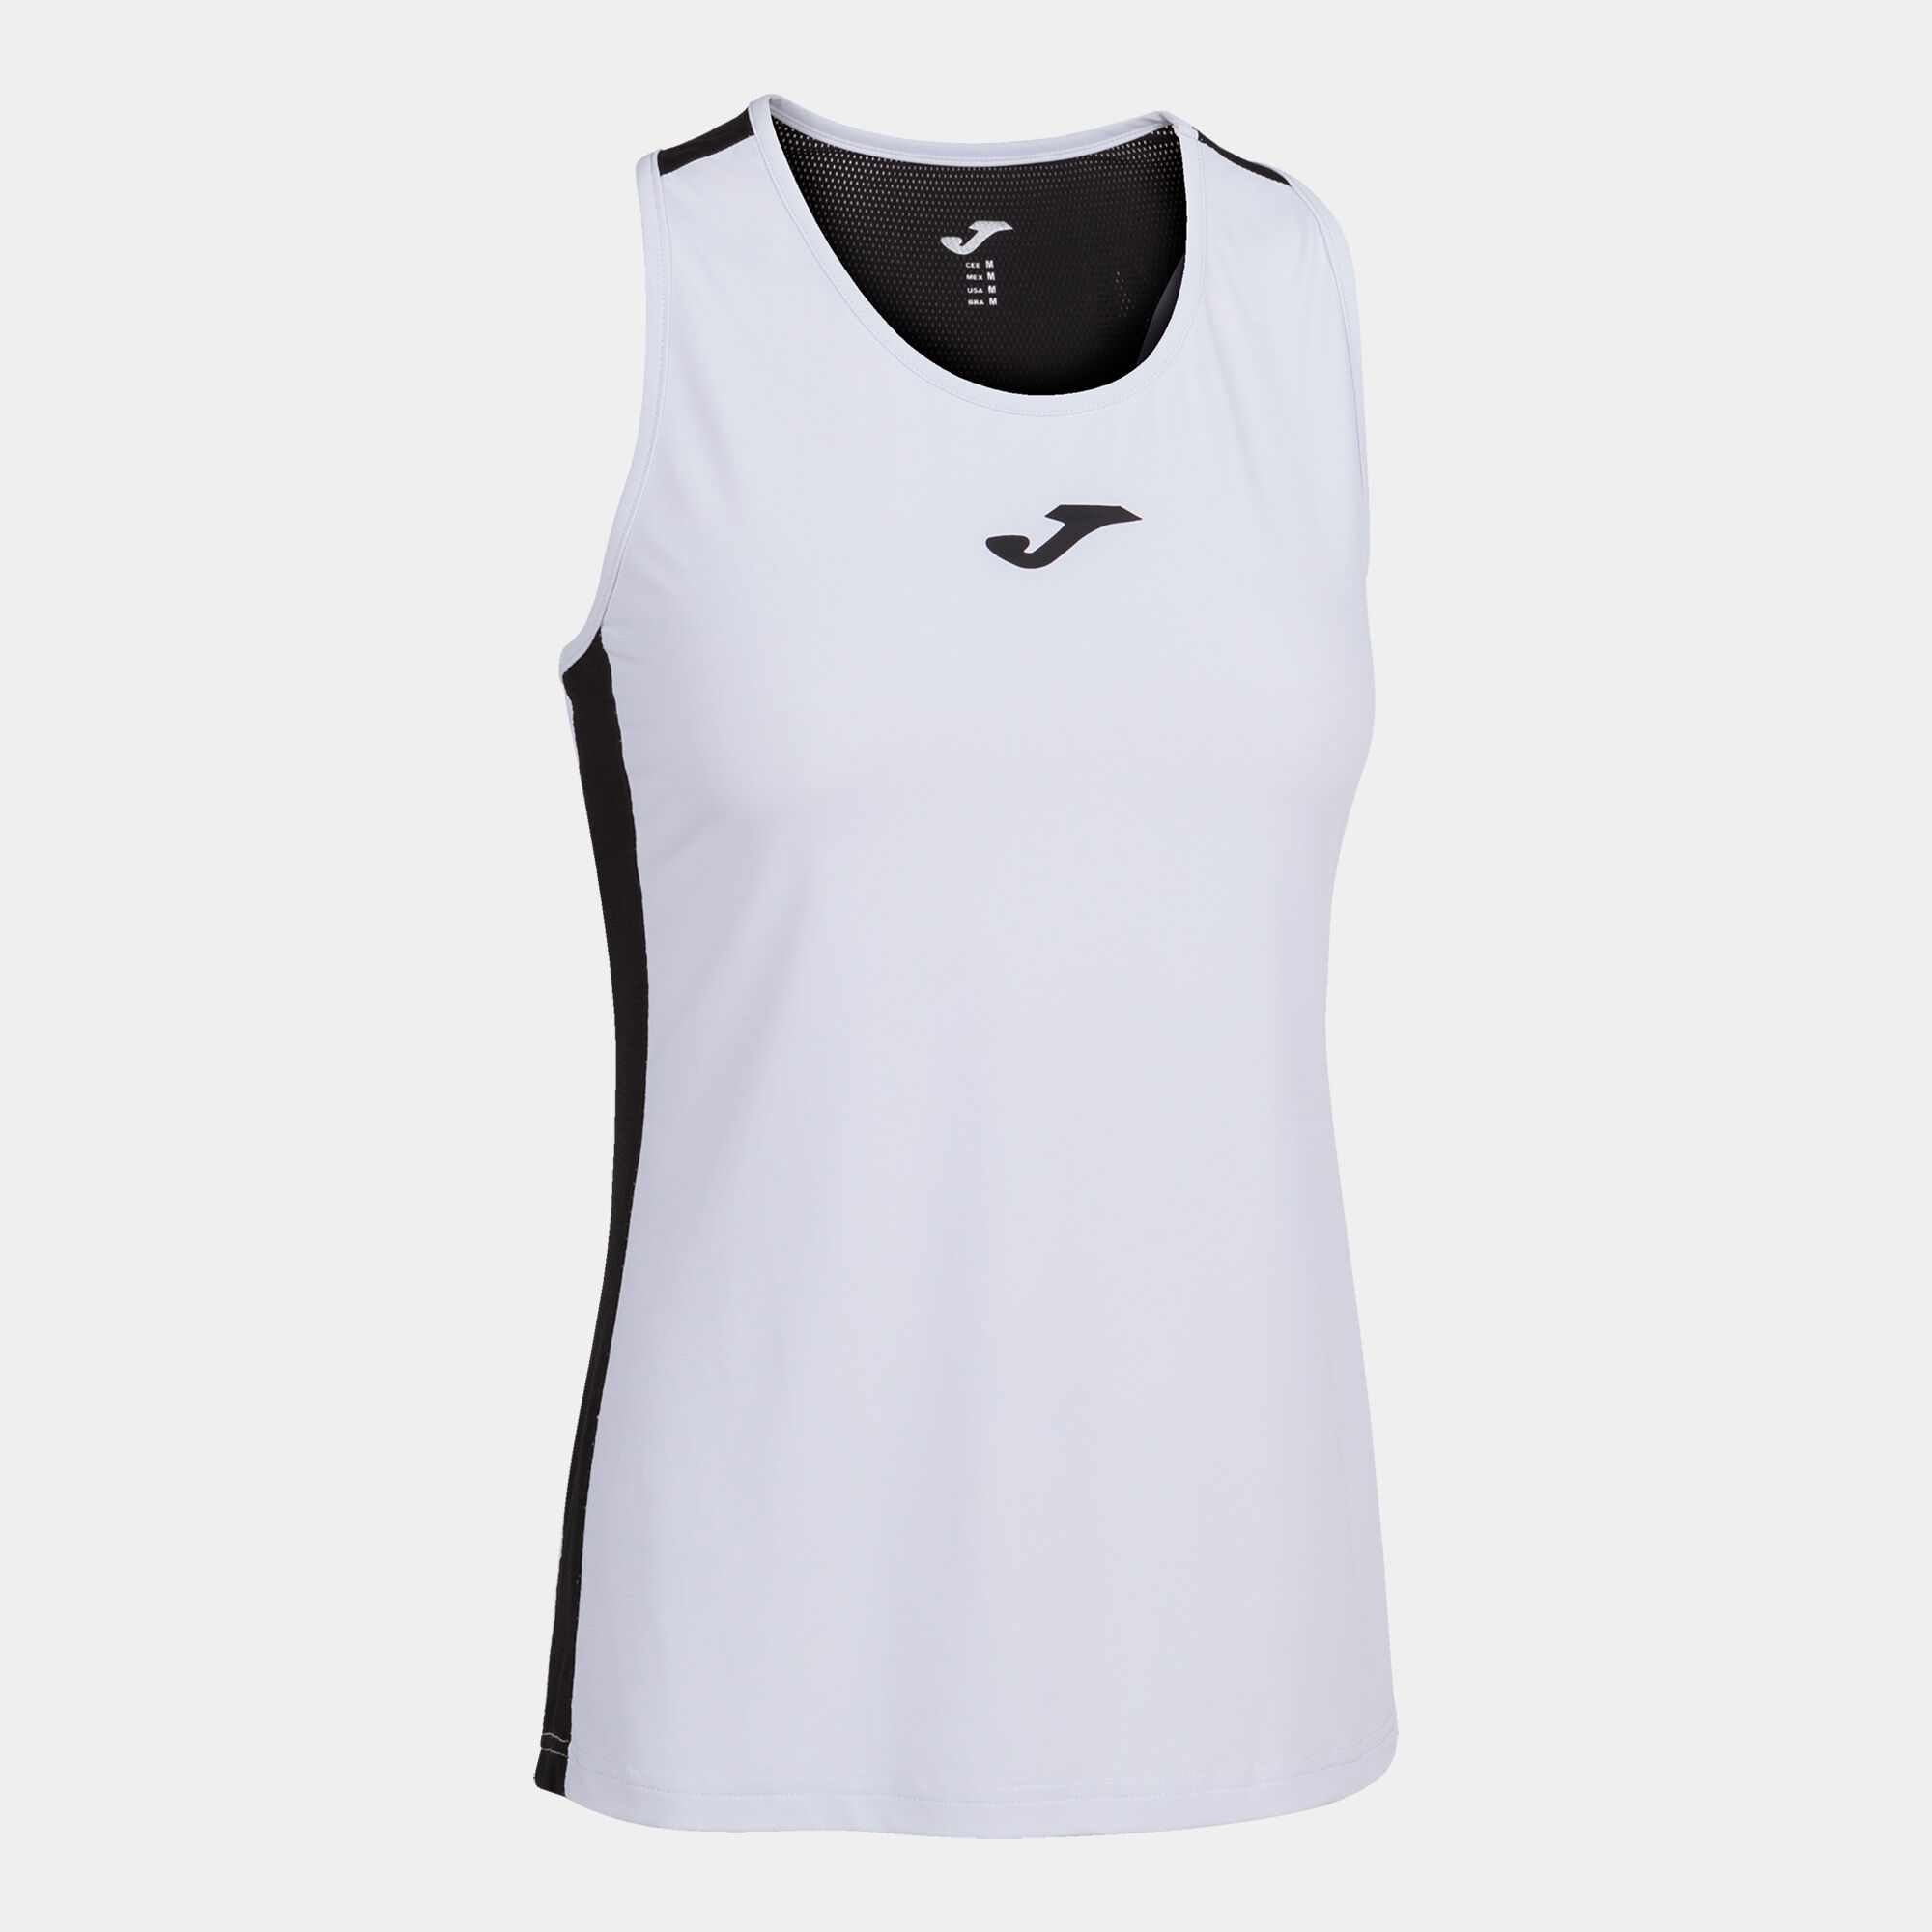 Camiseta tirantes mujer Torneo blanco negro